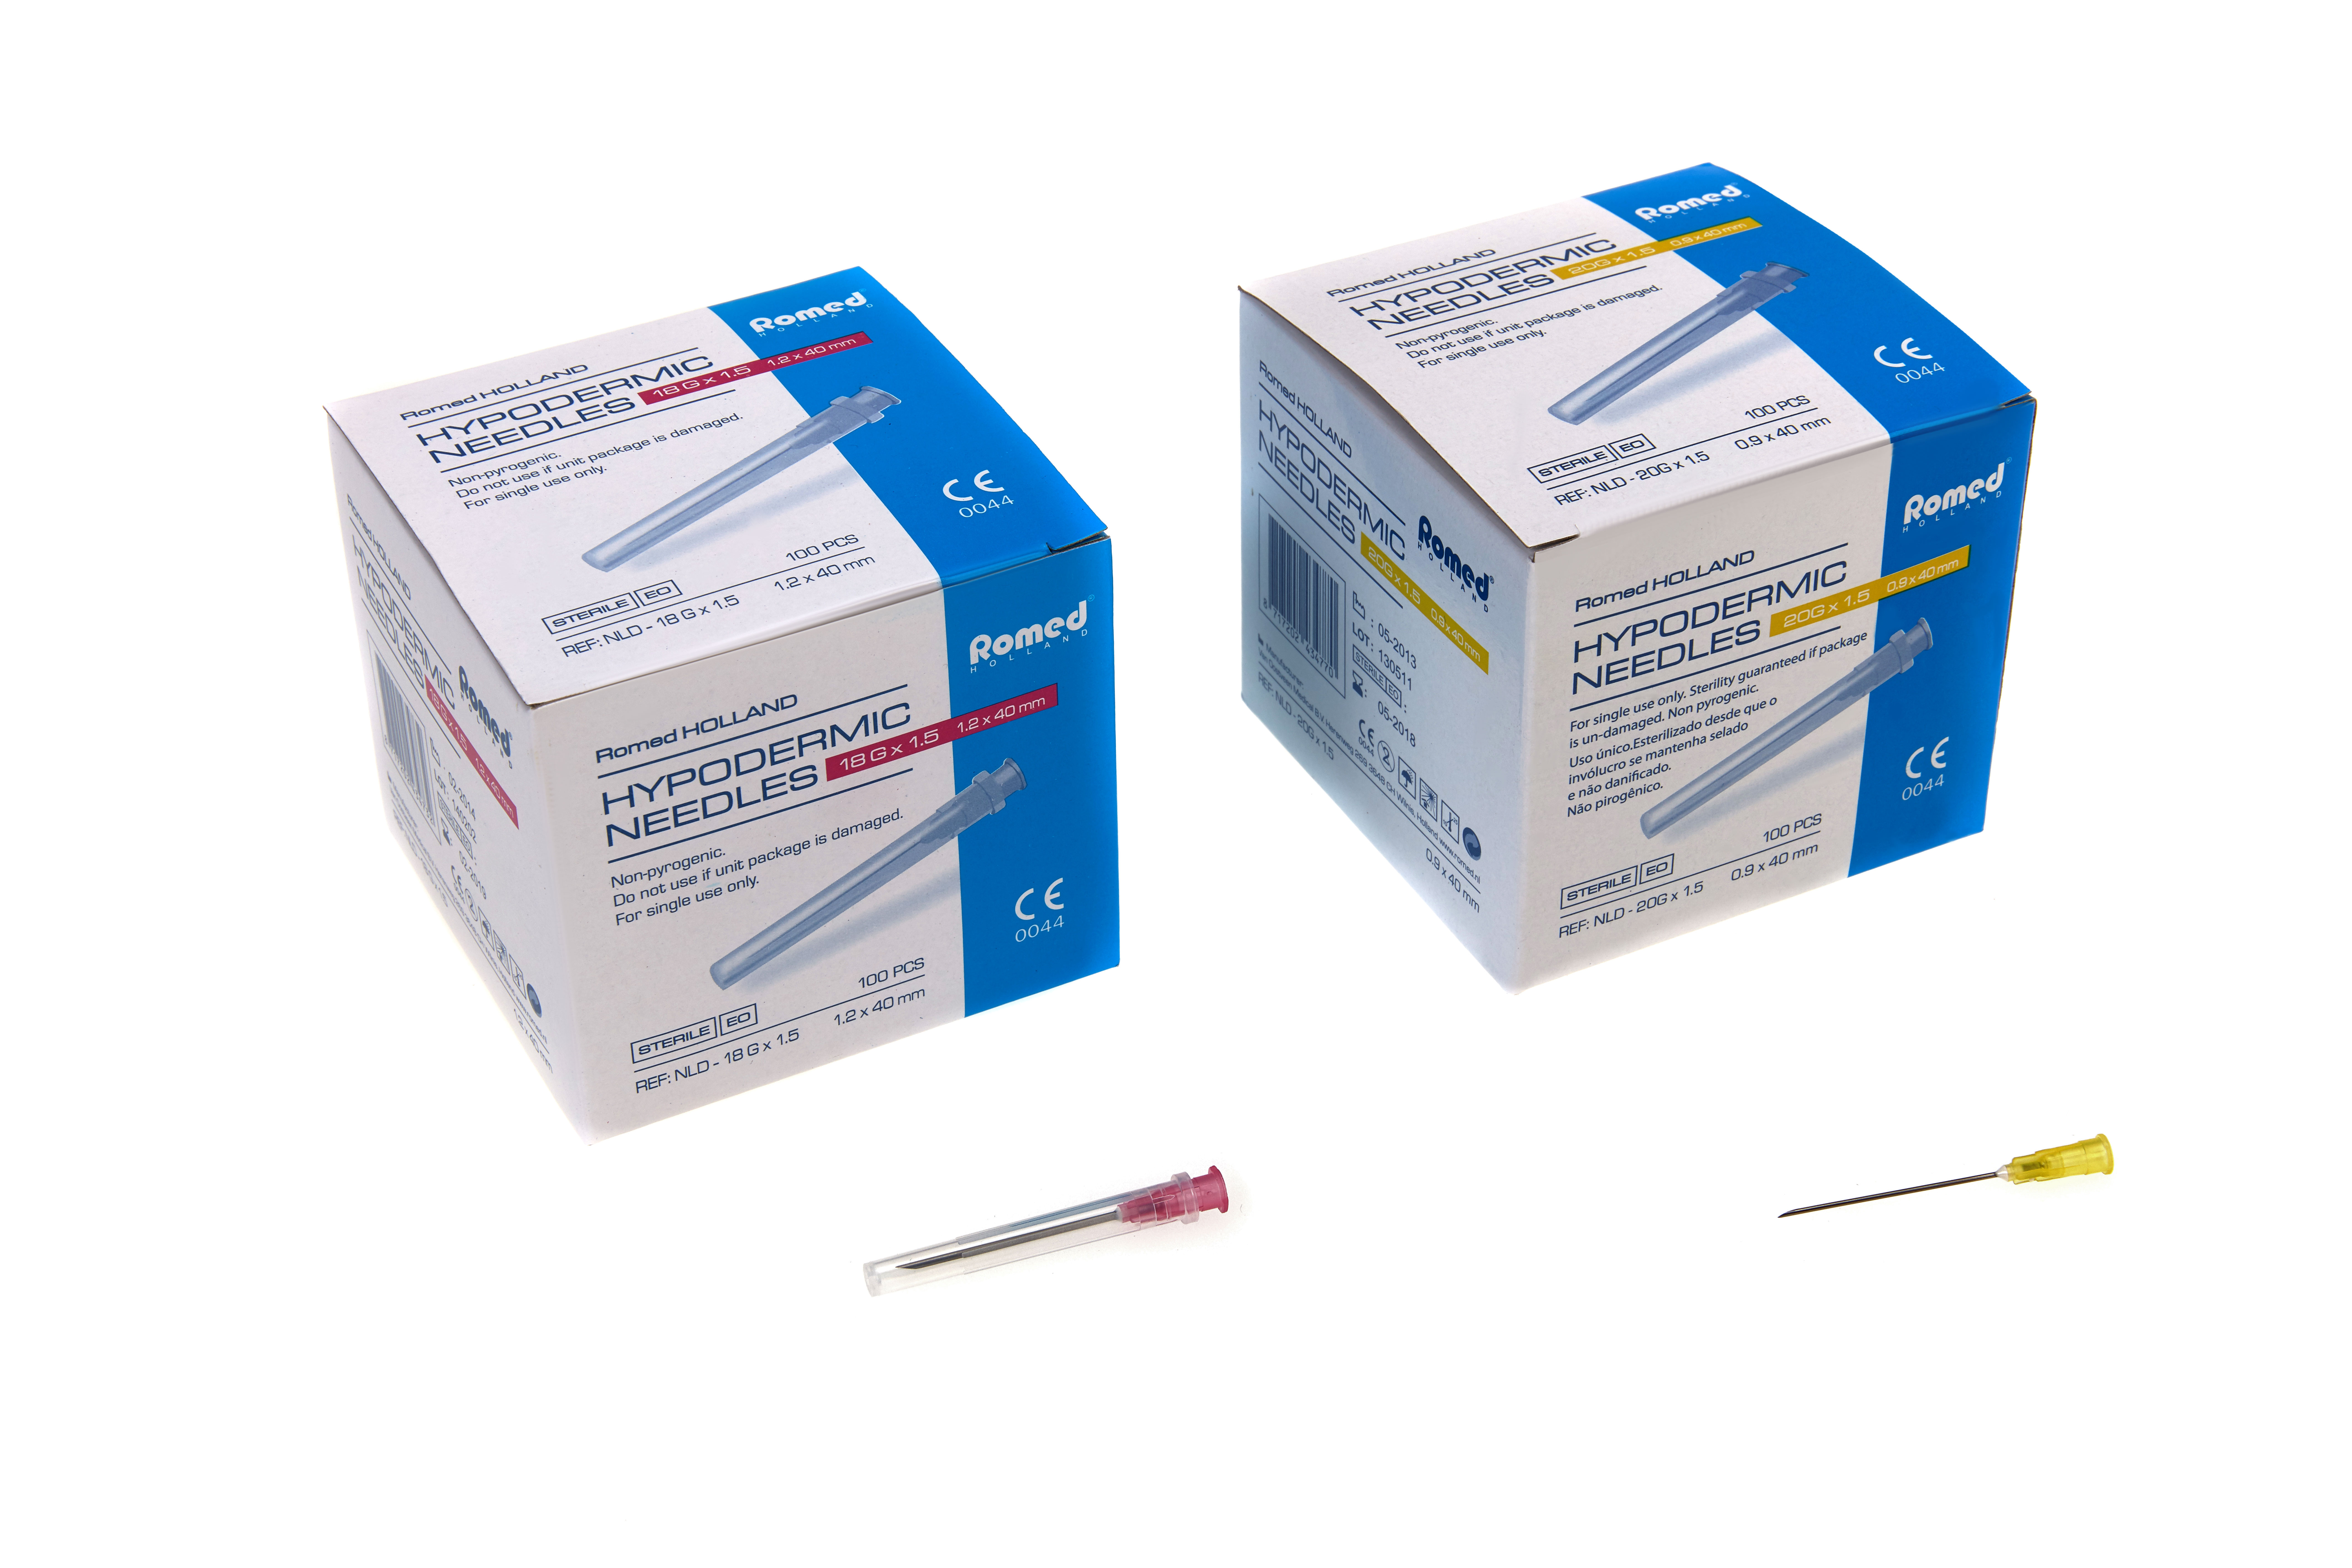 NLD-24GX1 Romed hypodermic needles, 24gx1", sterile per piece, 100 pcs in an inner box, 50 x 100 pcs = 5.000 pcs in a carton.